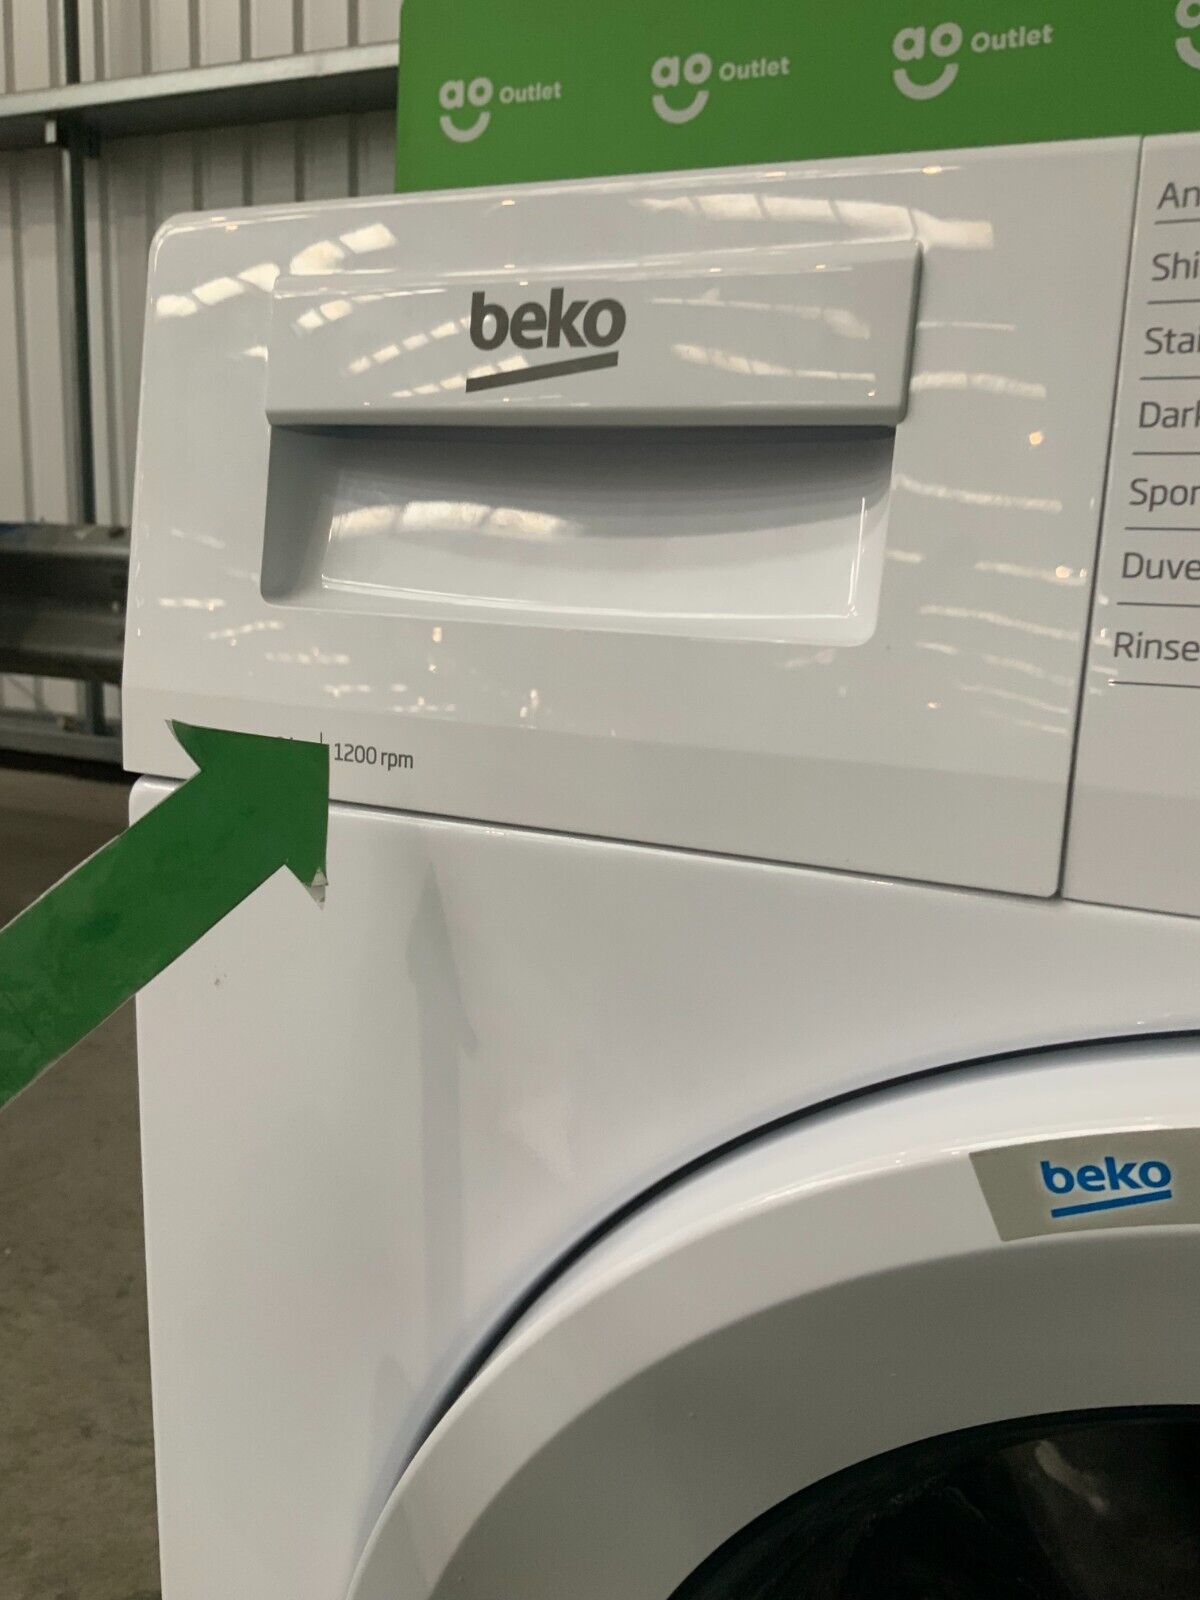 Beko 9Kg Washing Machine WTL92151W #LF59854